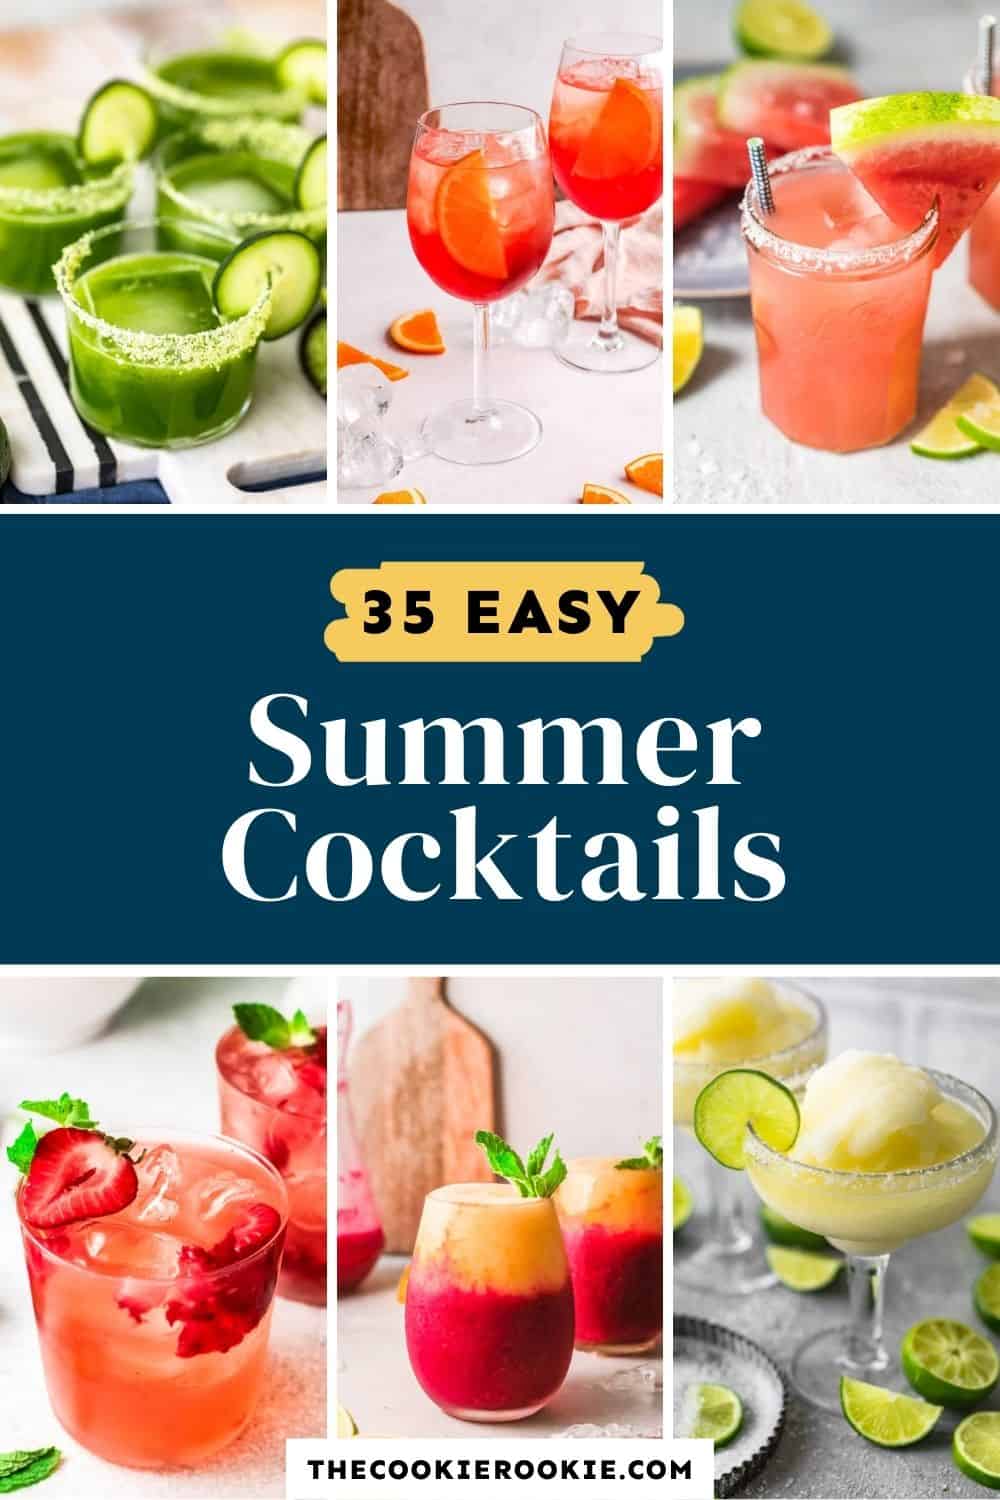 https://www.thecookierookie.com/wp-content/uploads/2022/05/summer-cocktails.jpg